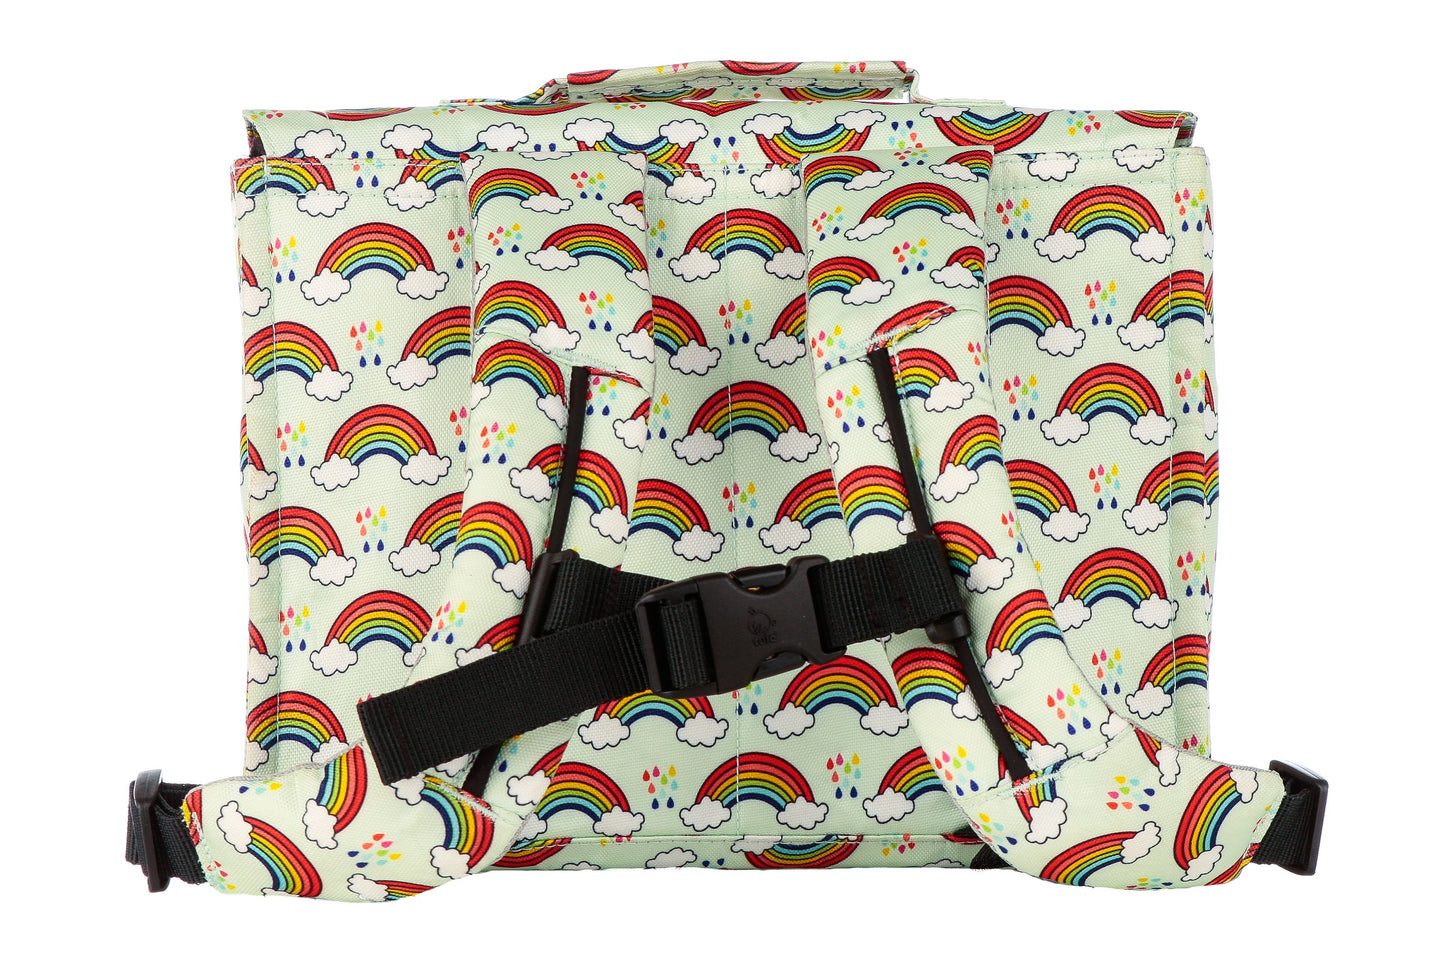 Rainbow Showers - Tula Kids Backpack